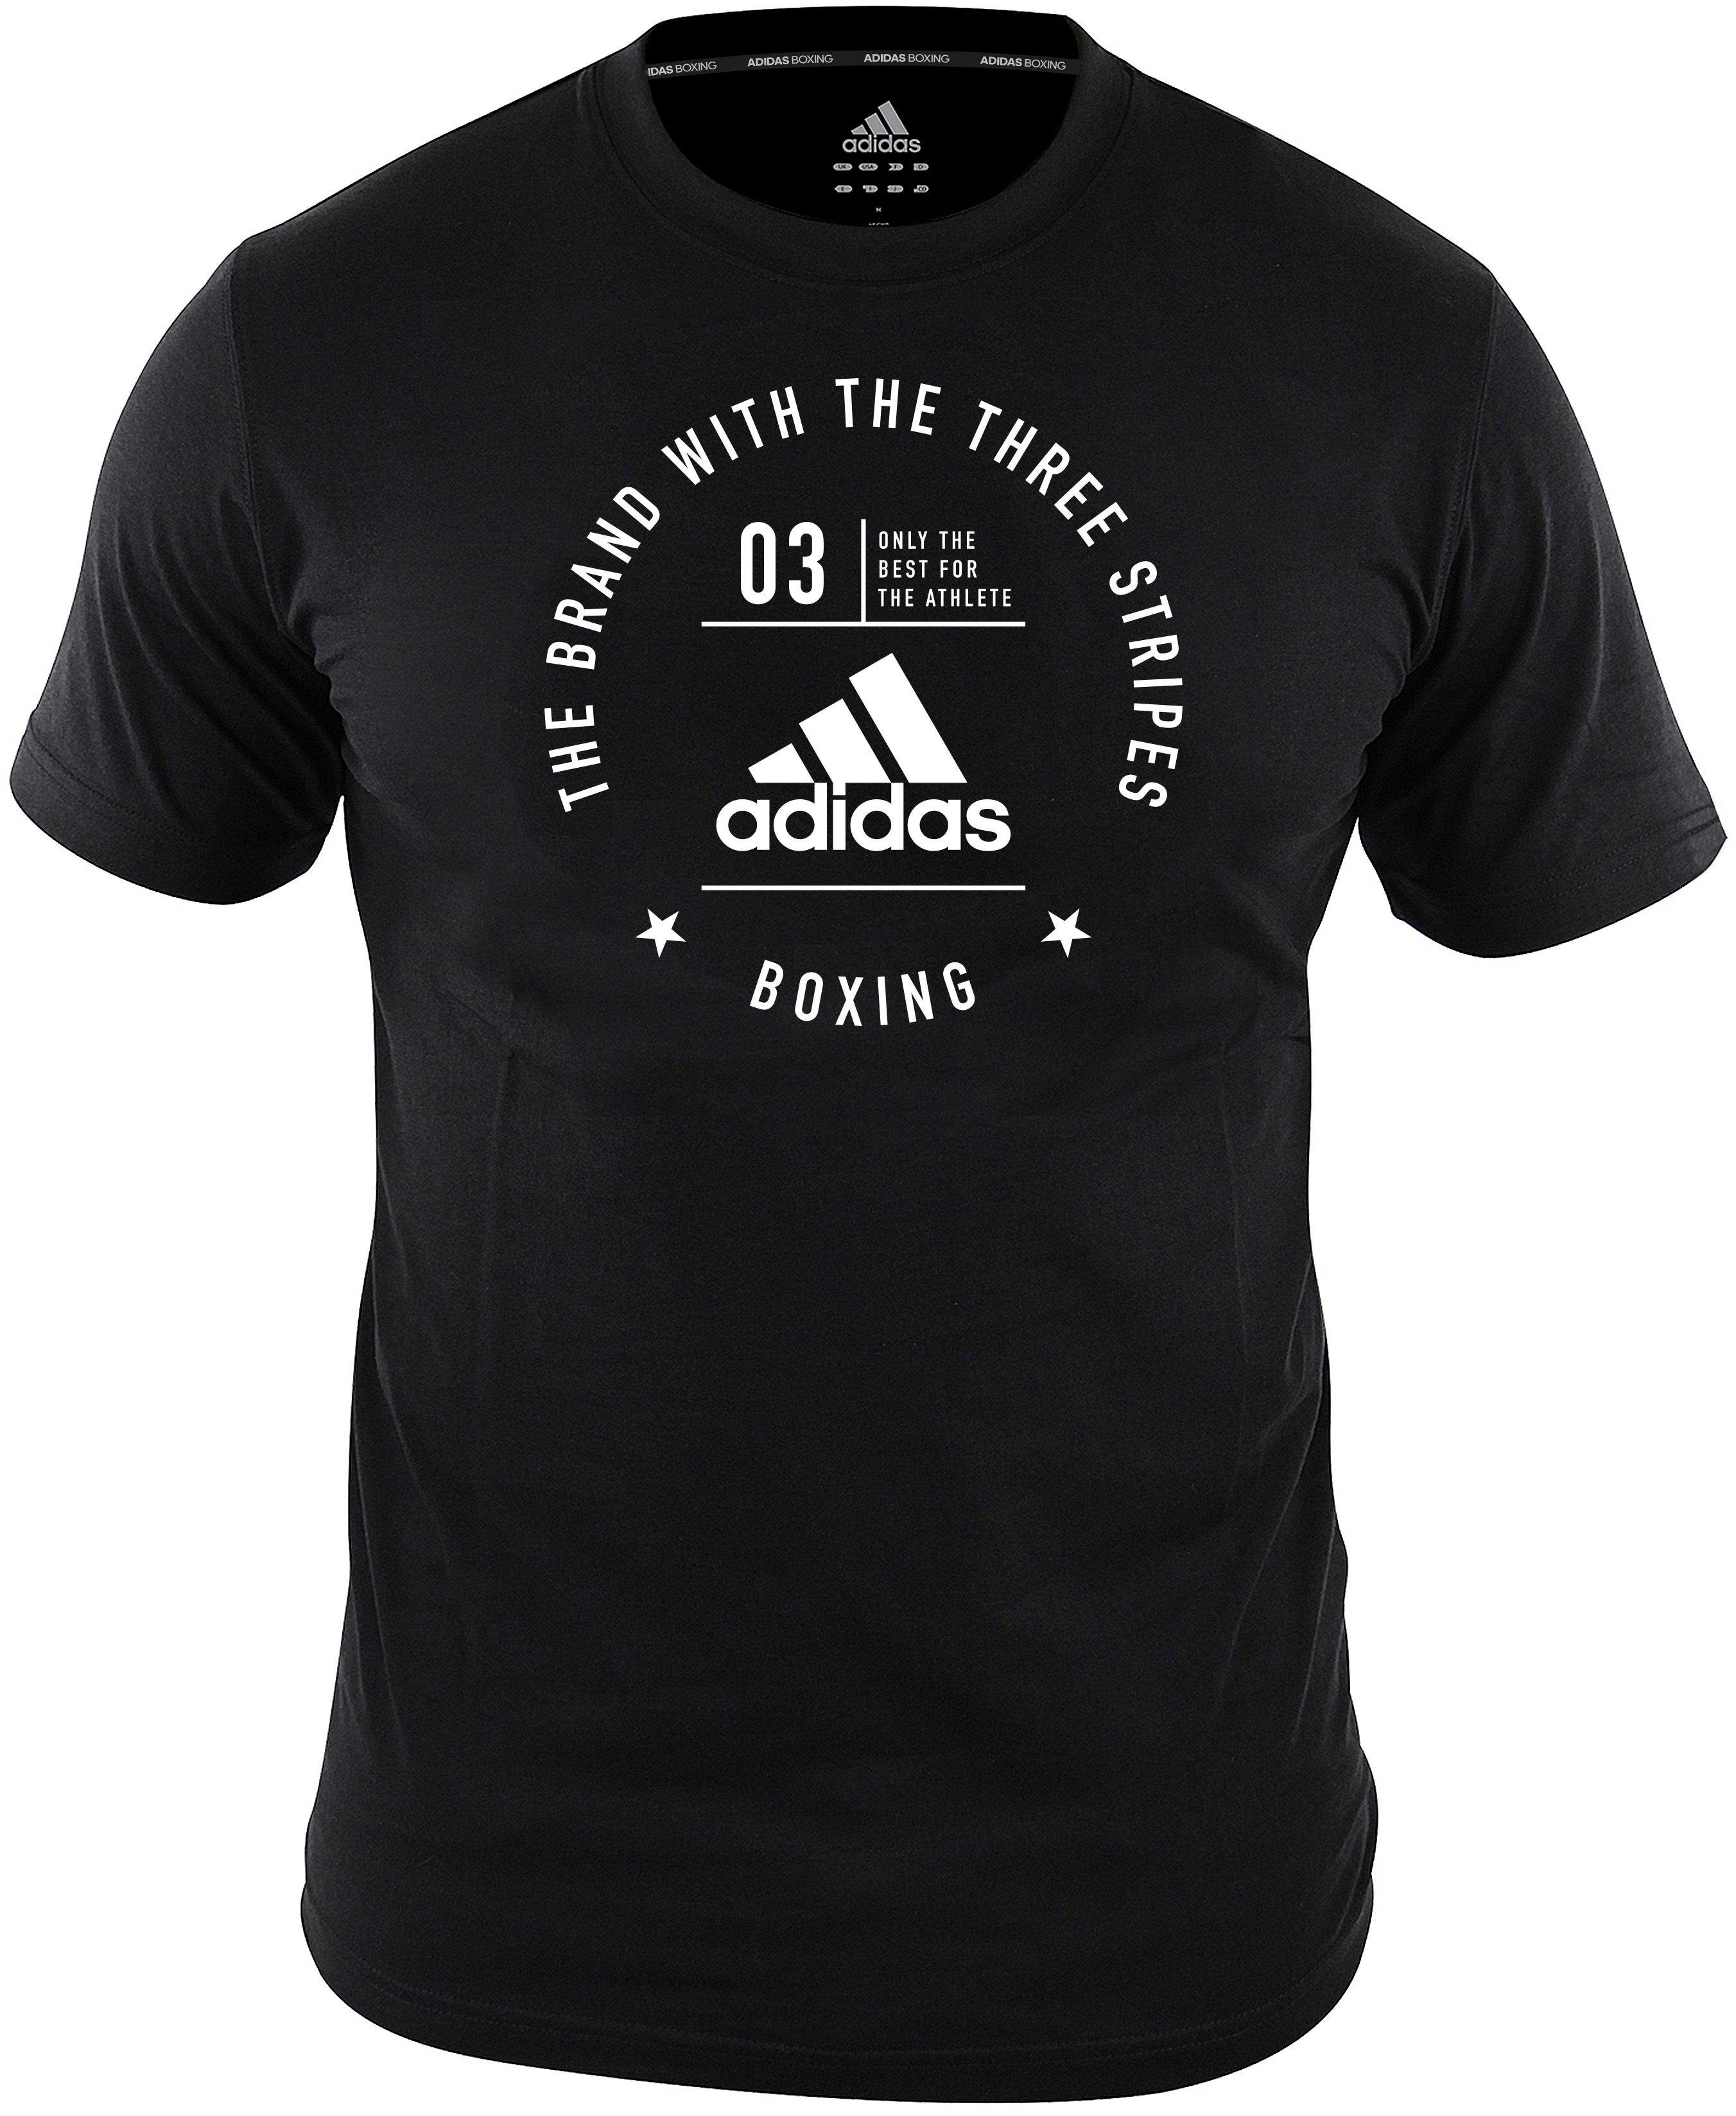 Bedachtzaam Eerste nicotine adidas Performance T-shirt Community T-shirt “Boxing” online kopen | OTTO